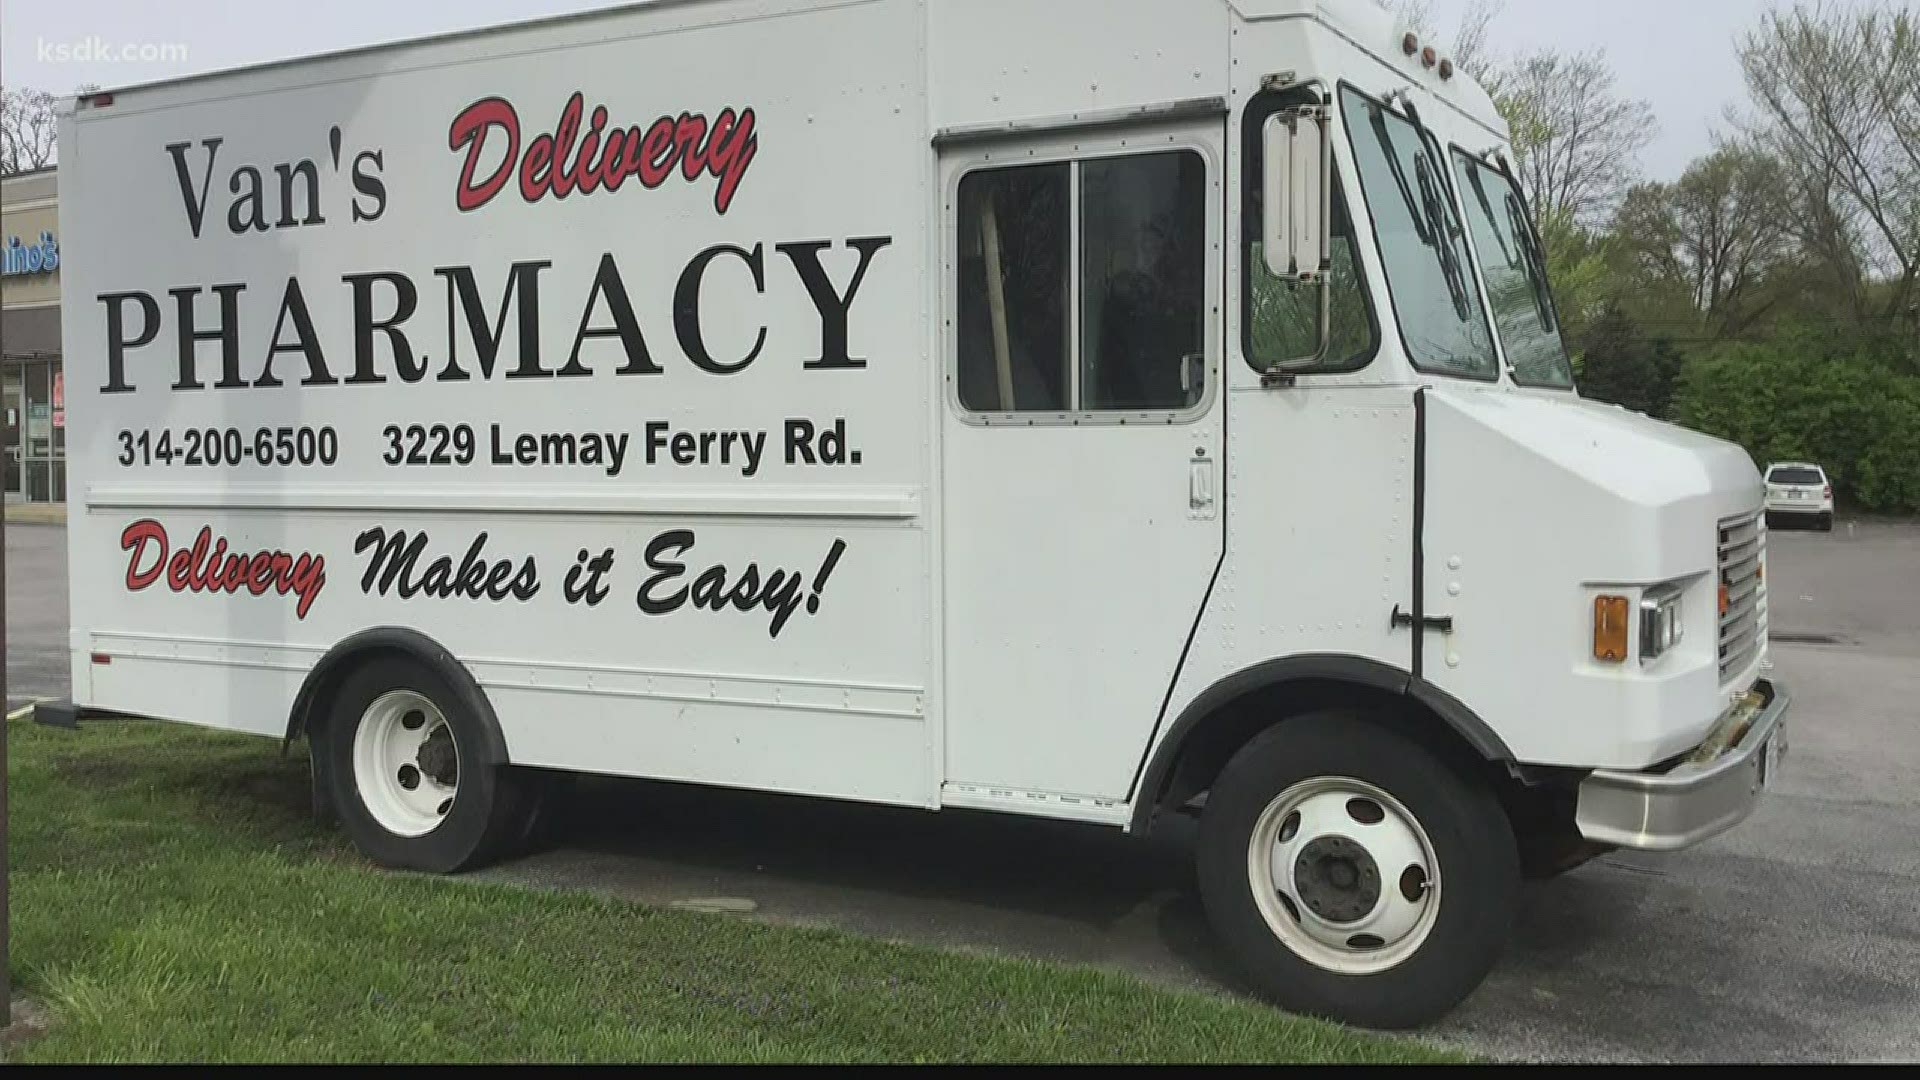 Van's Delivery Pharmacy delivers medicine straight to people's front doors.